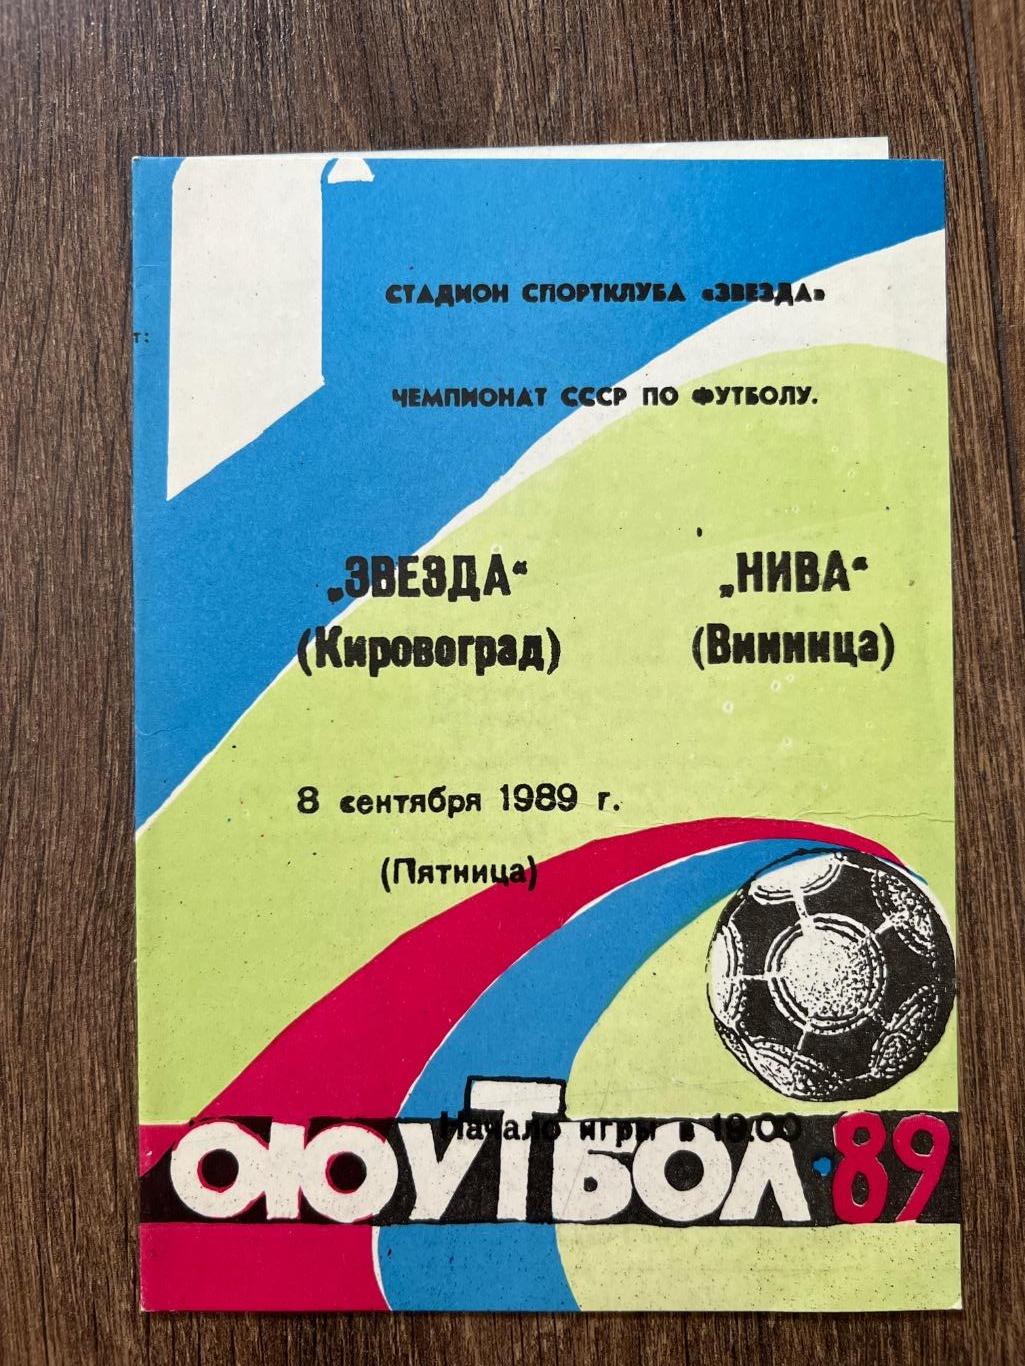 Звезда Кировоград - Нива Винница 1989